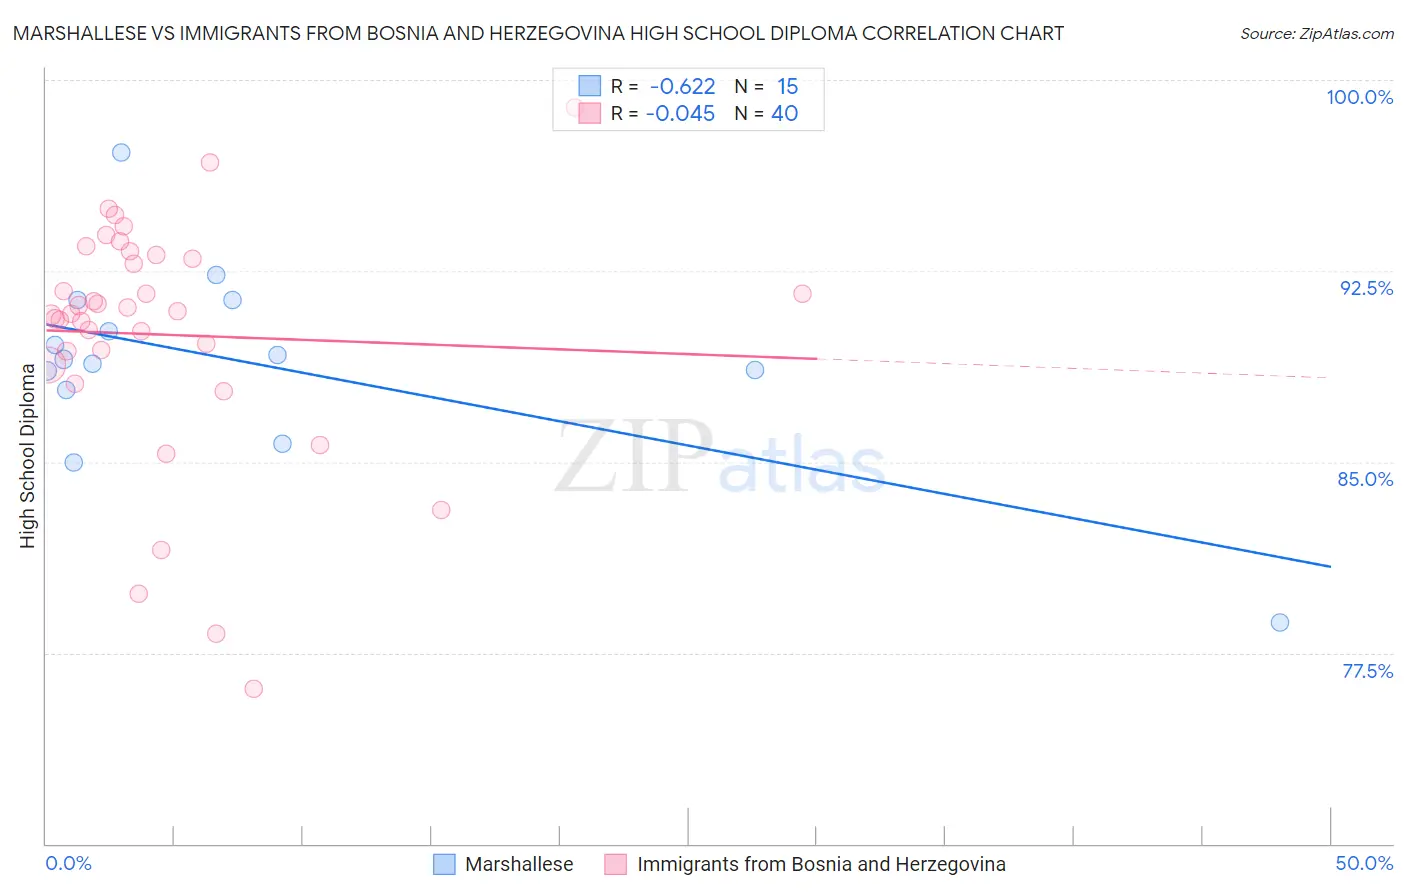 Marshallese vs Immigrants from Bosnia and Herzegovina High School Diploma